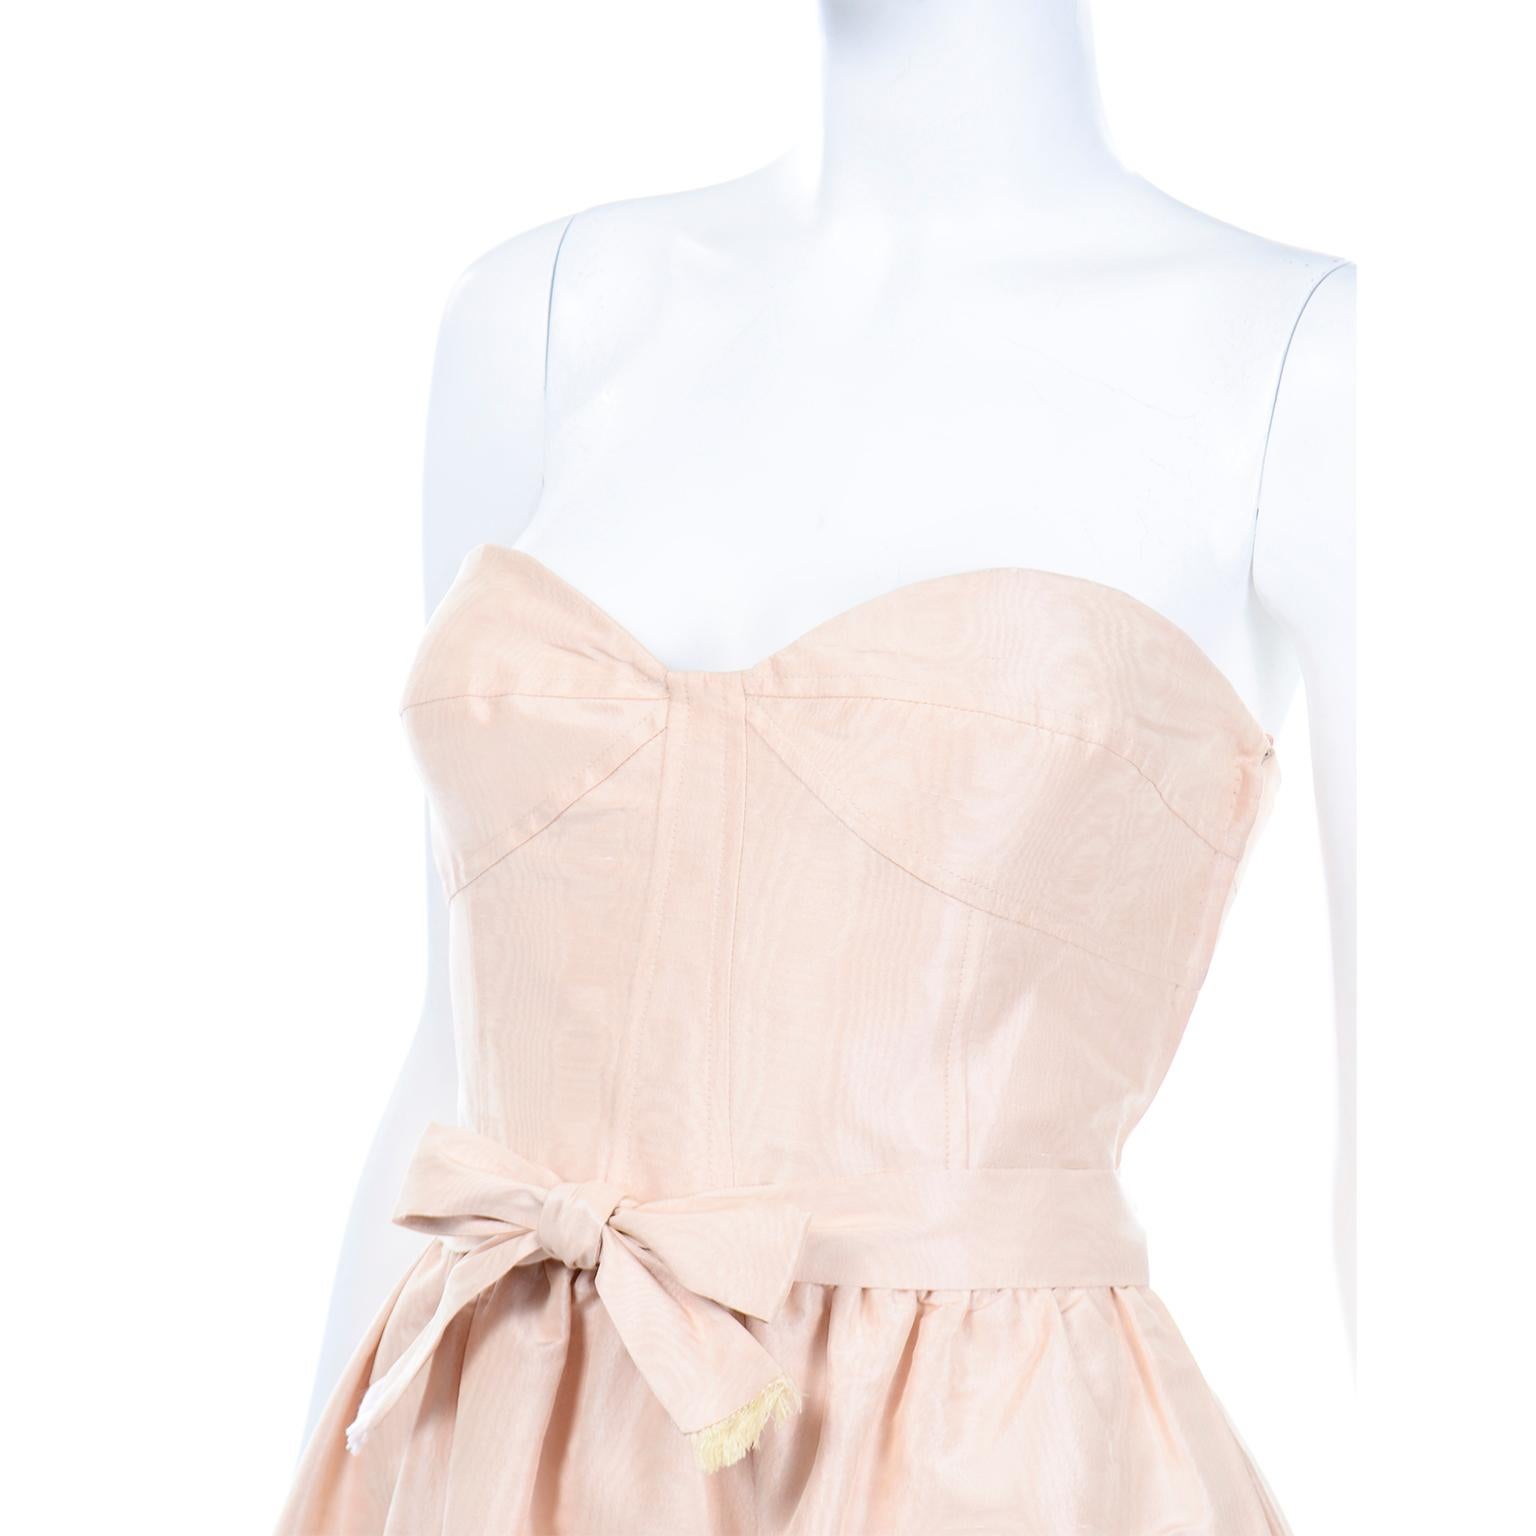 Orange Oscar de la Renta Blush Pink Peach Strapless Sweetheart Evening Mini Dress